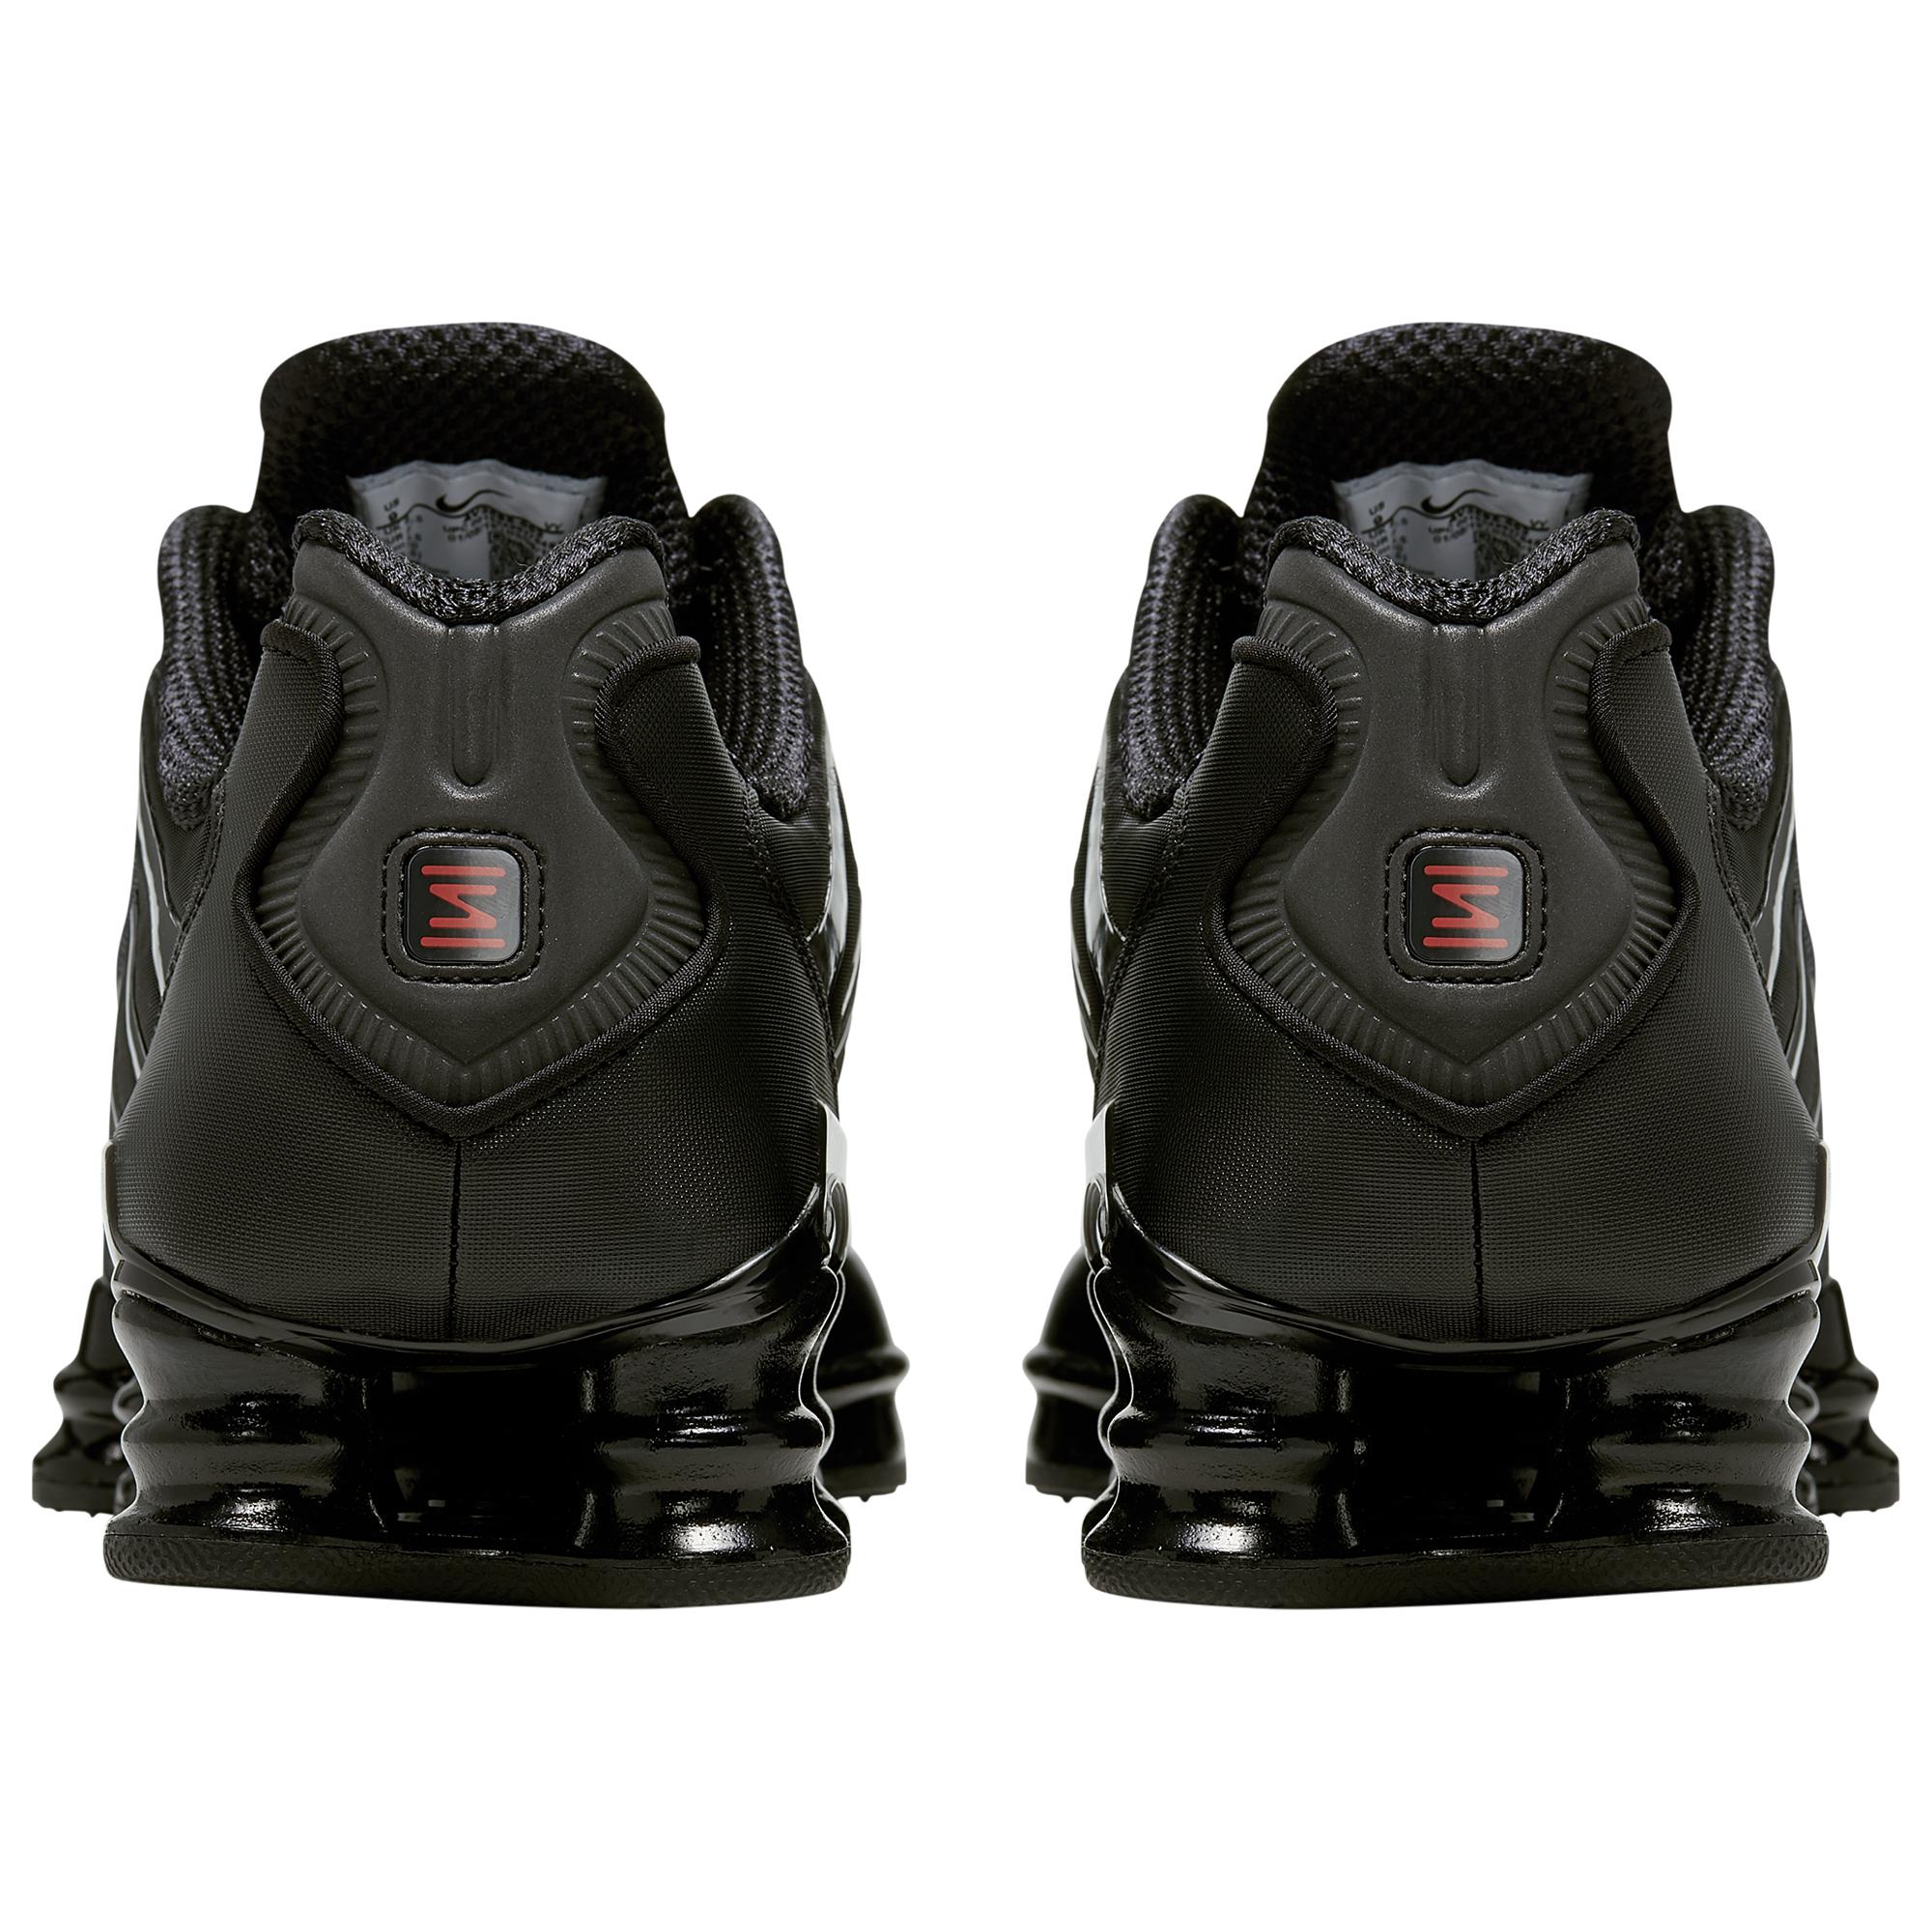 Nike Synthetic Shox Tl - Shoes in Black/Black/Orange (Black) for Men - Save  53% - Lyst